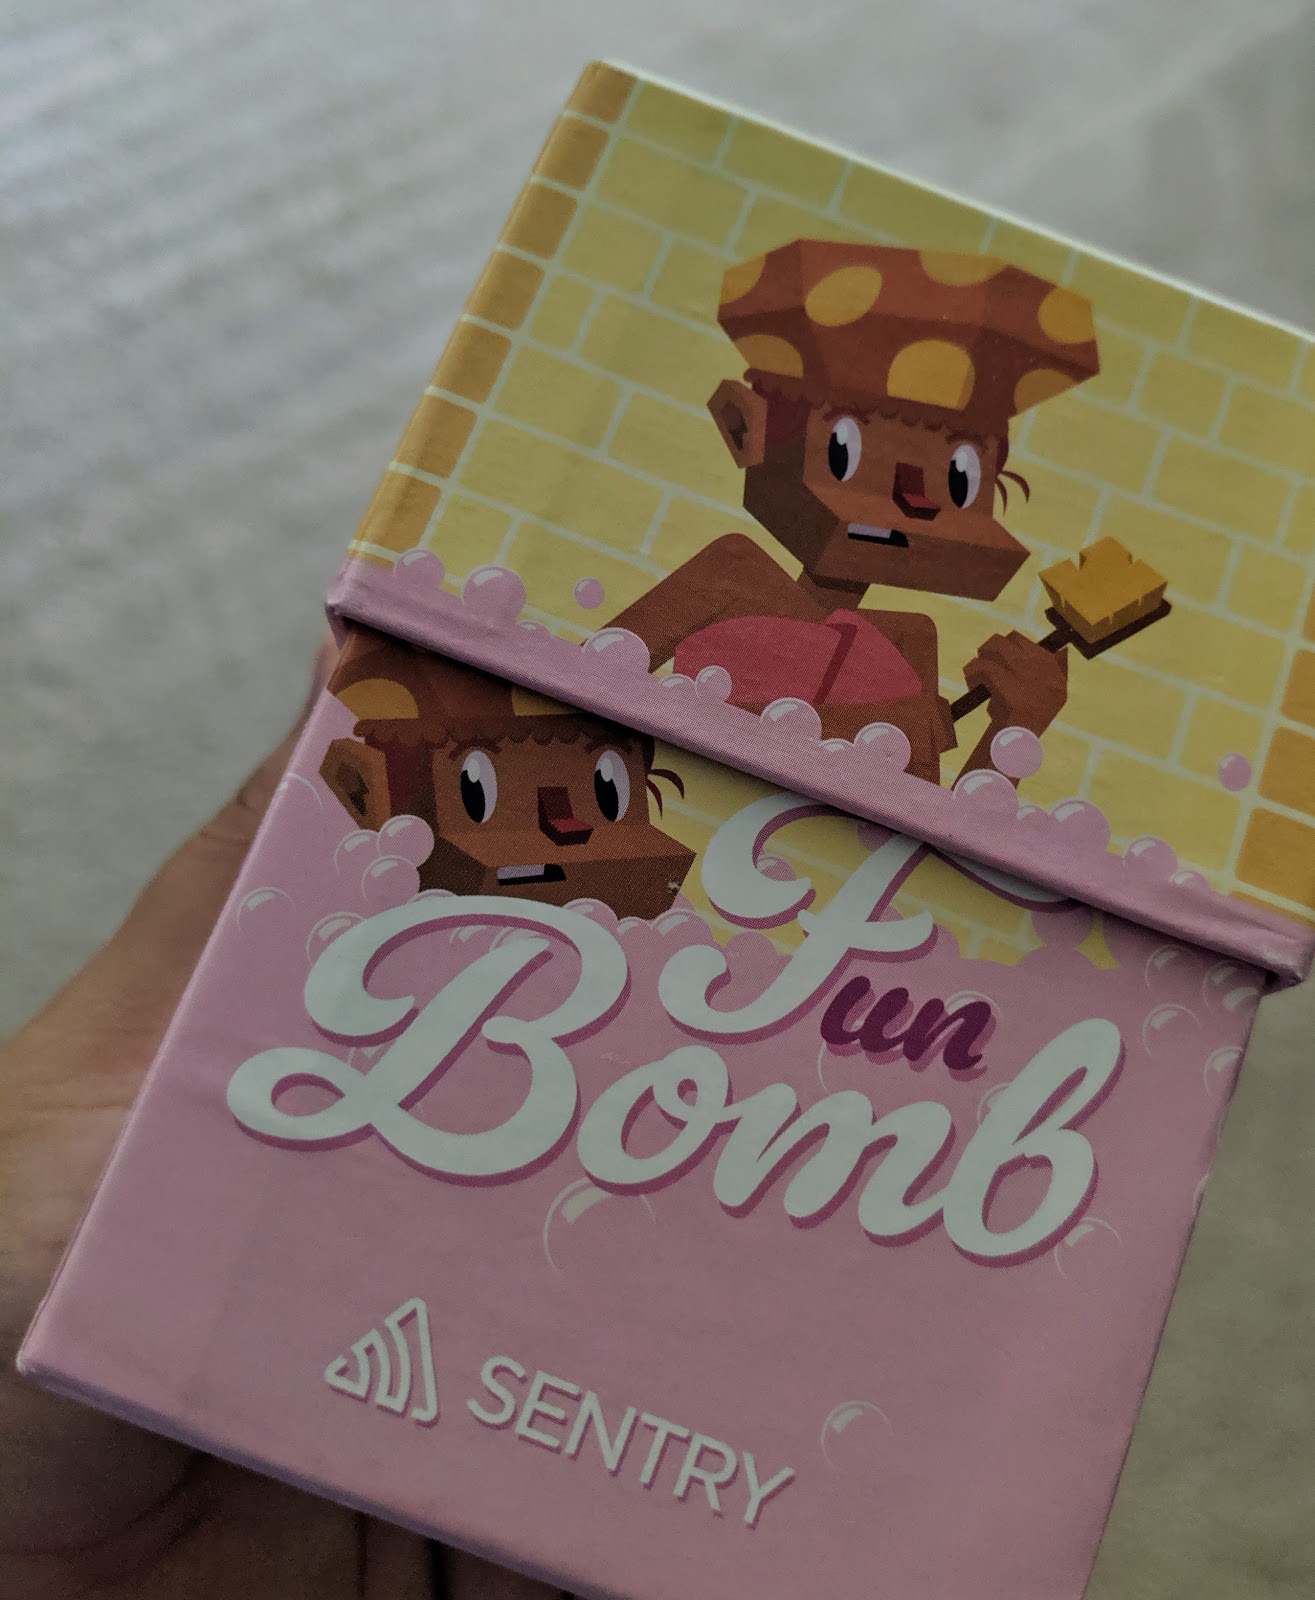 Sentry's bath bomb swag